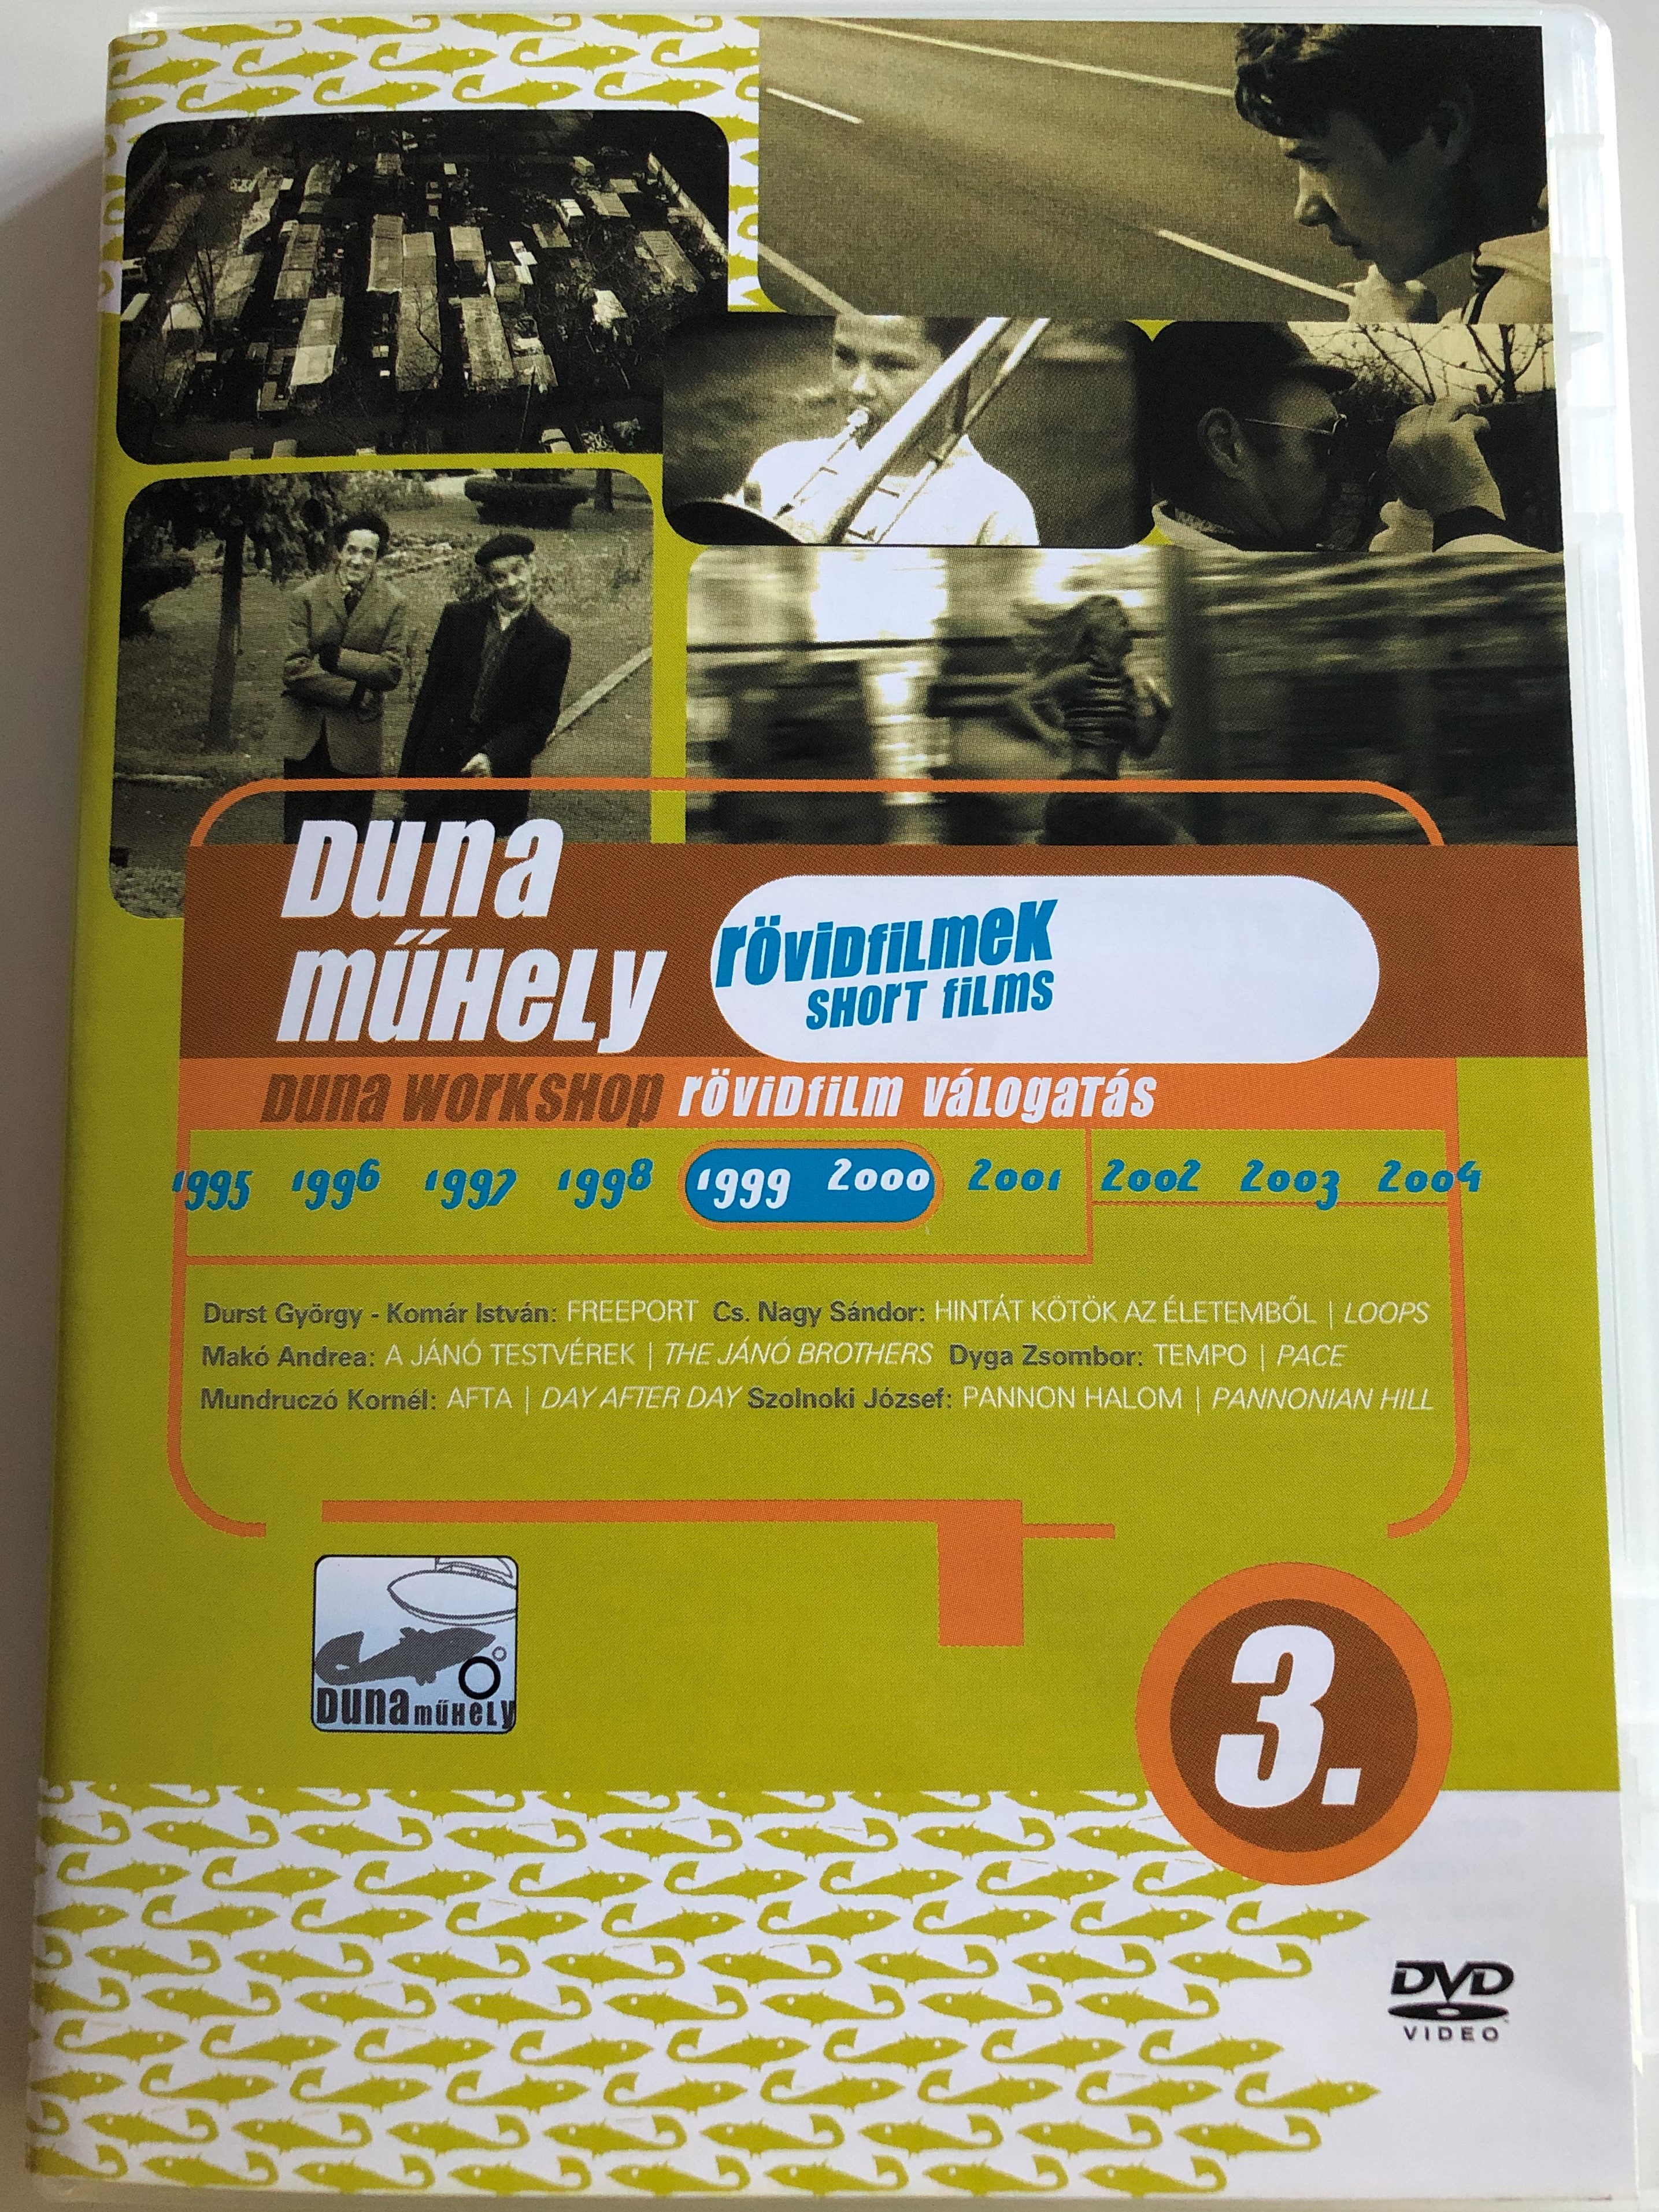 duna-workshop-short-films-3.-dvd-1999-2000-duna-m-hely-r-vid-filmek-3.-freeport-hint-t-k-t-k-az-letemb-l-loops-he-j-n-brothers-pace-day-after-day-pannonian-hill-1-.jpg